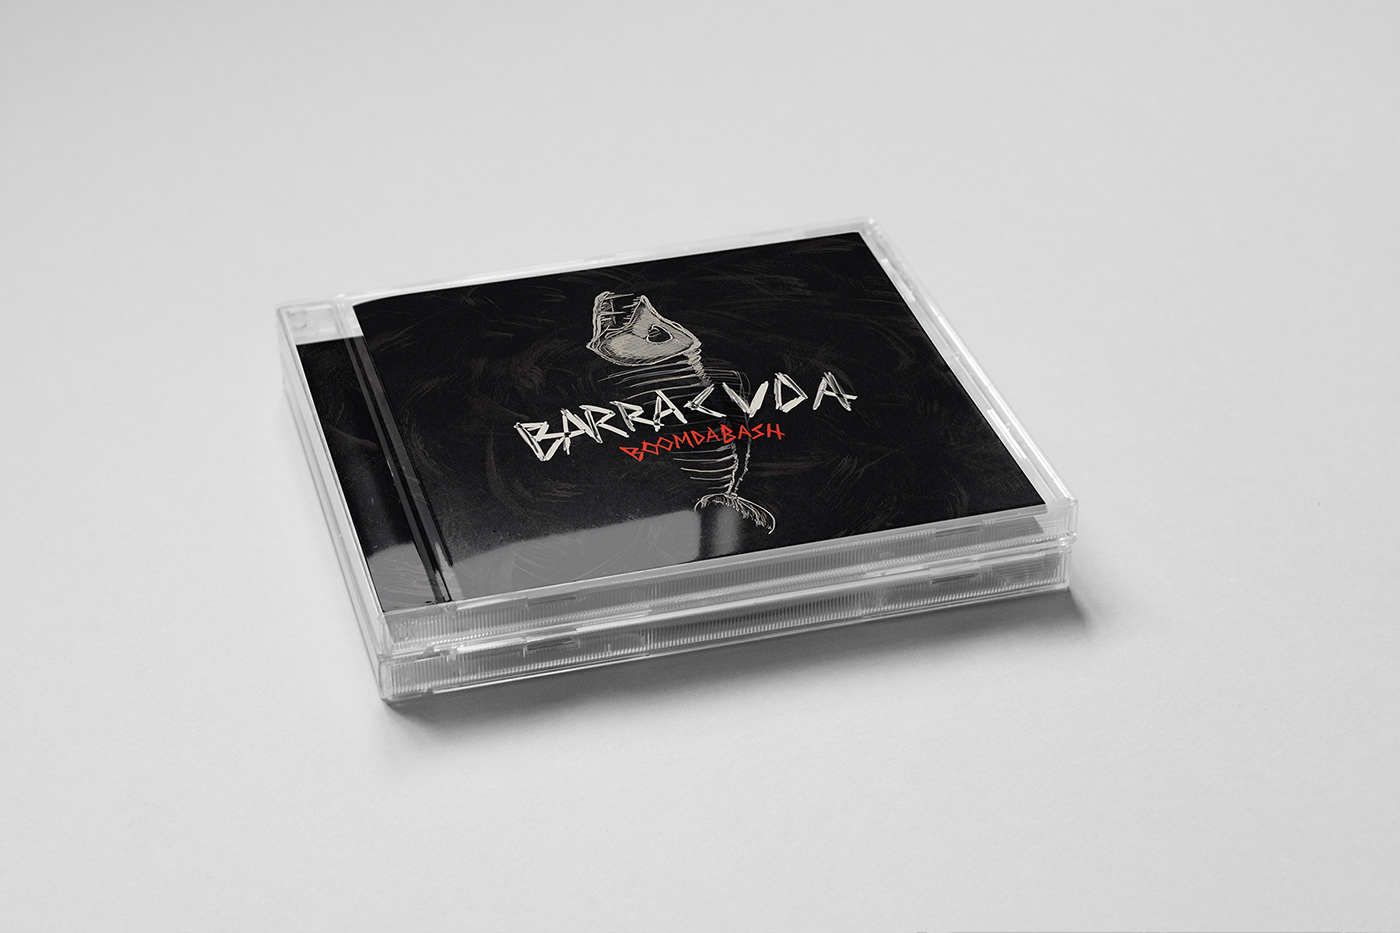 Advertising  artwork band barracuda boomdabash CD packaging cover Digital Art  flyer music